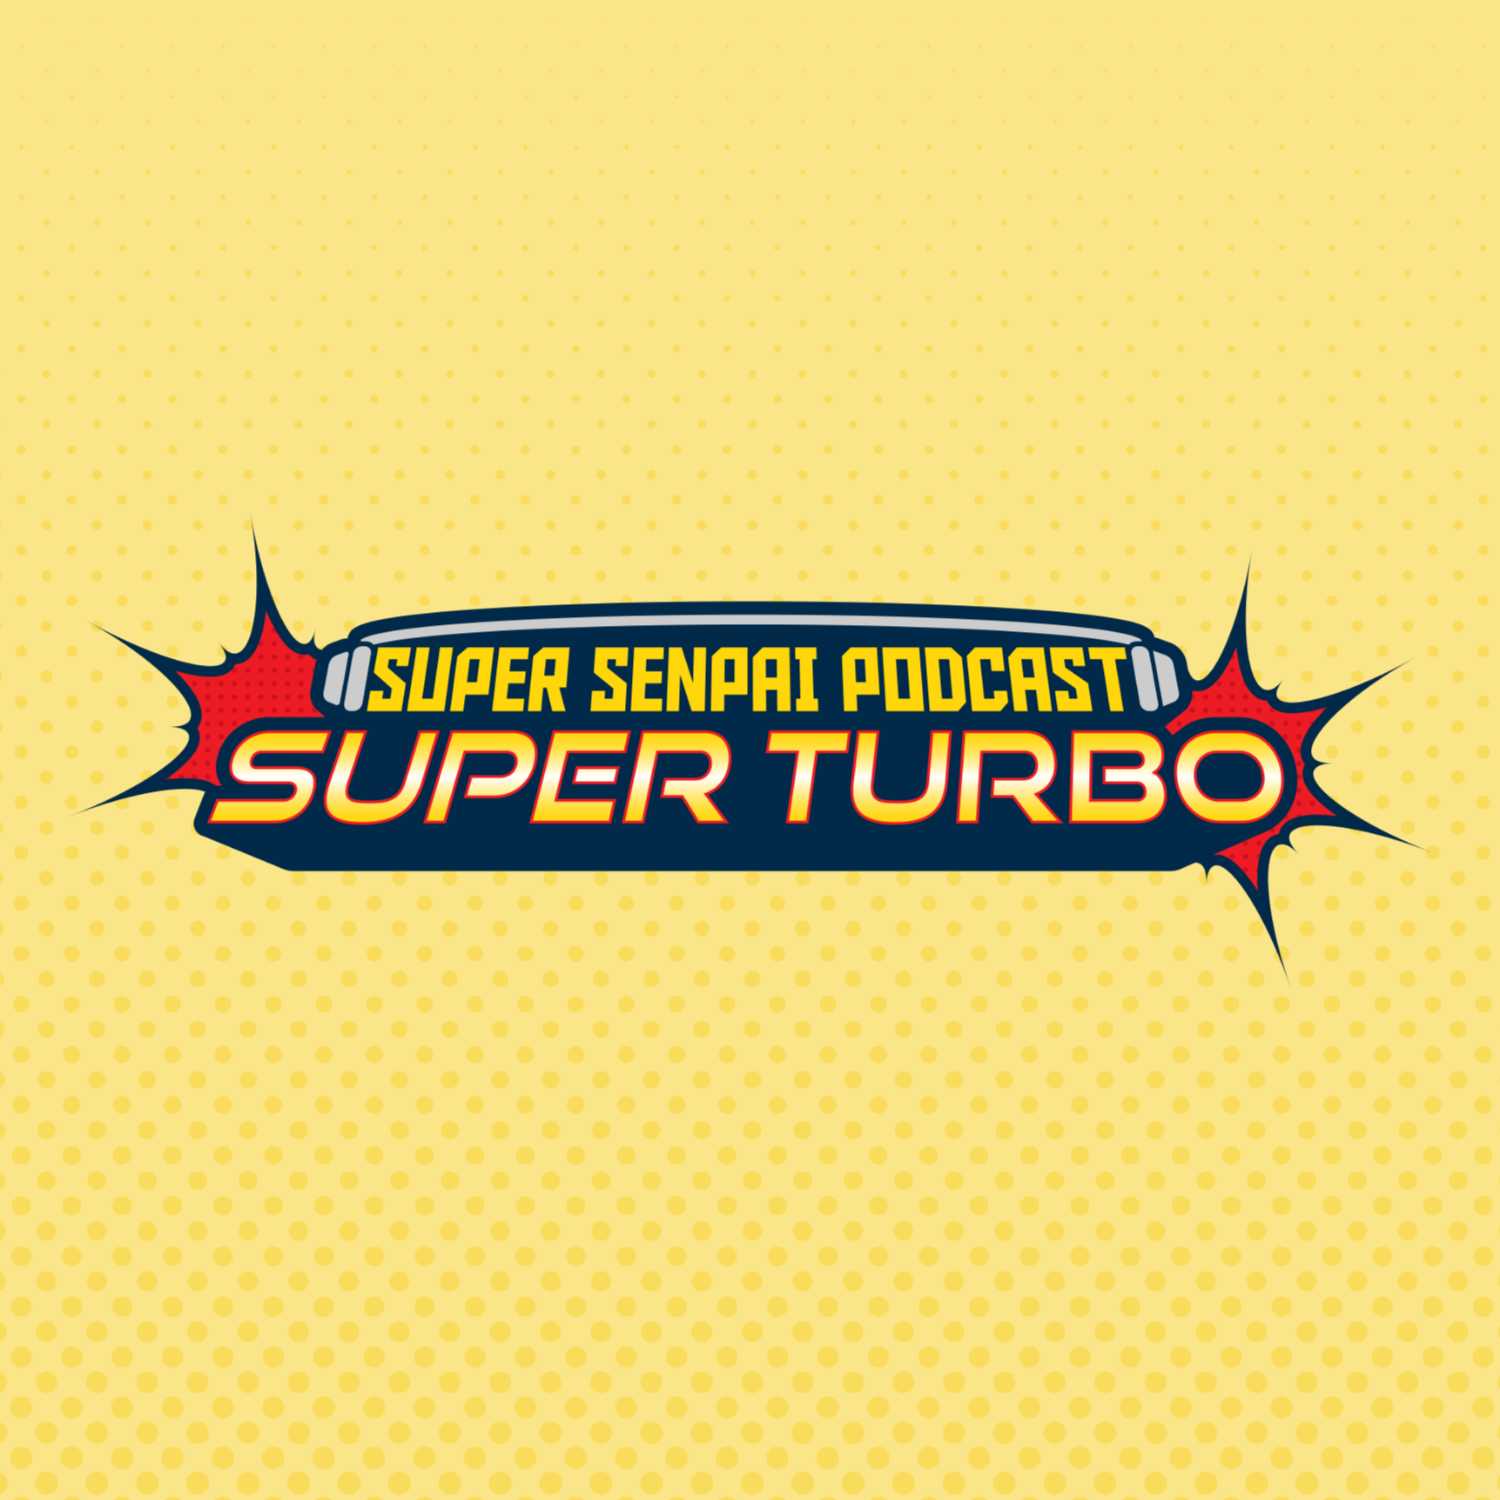 ST39 - Super Turbo Debut!